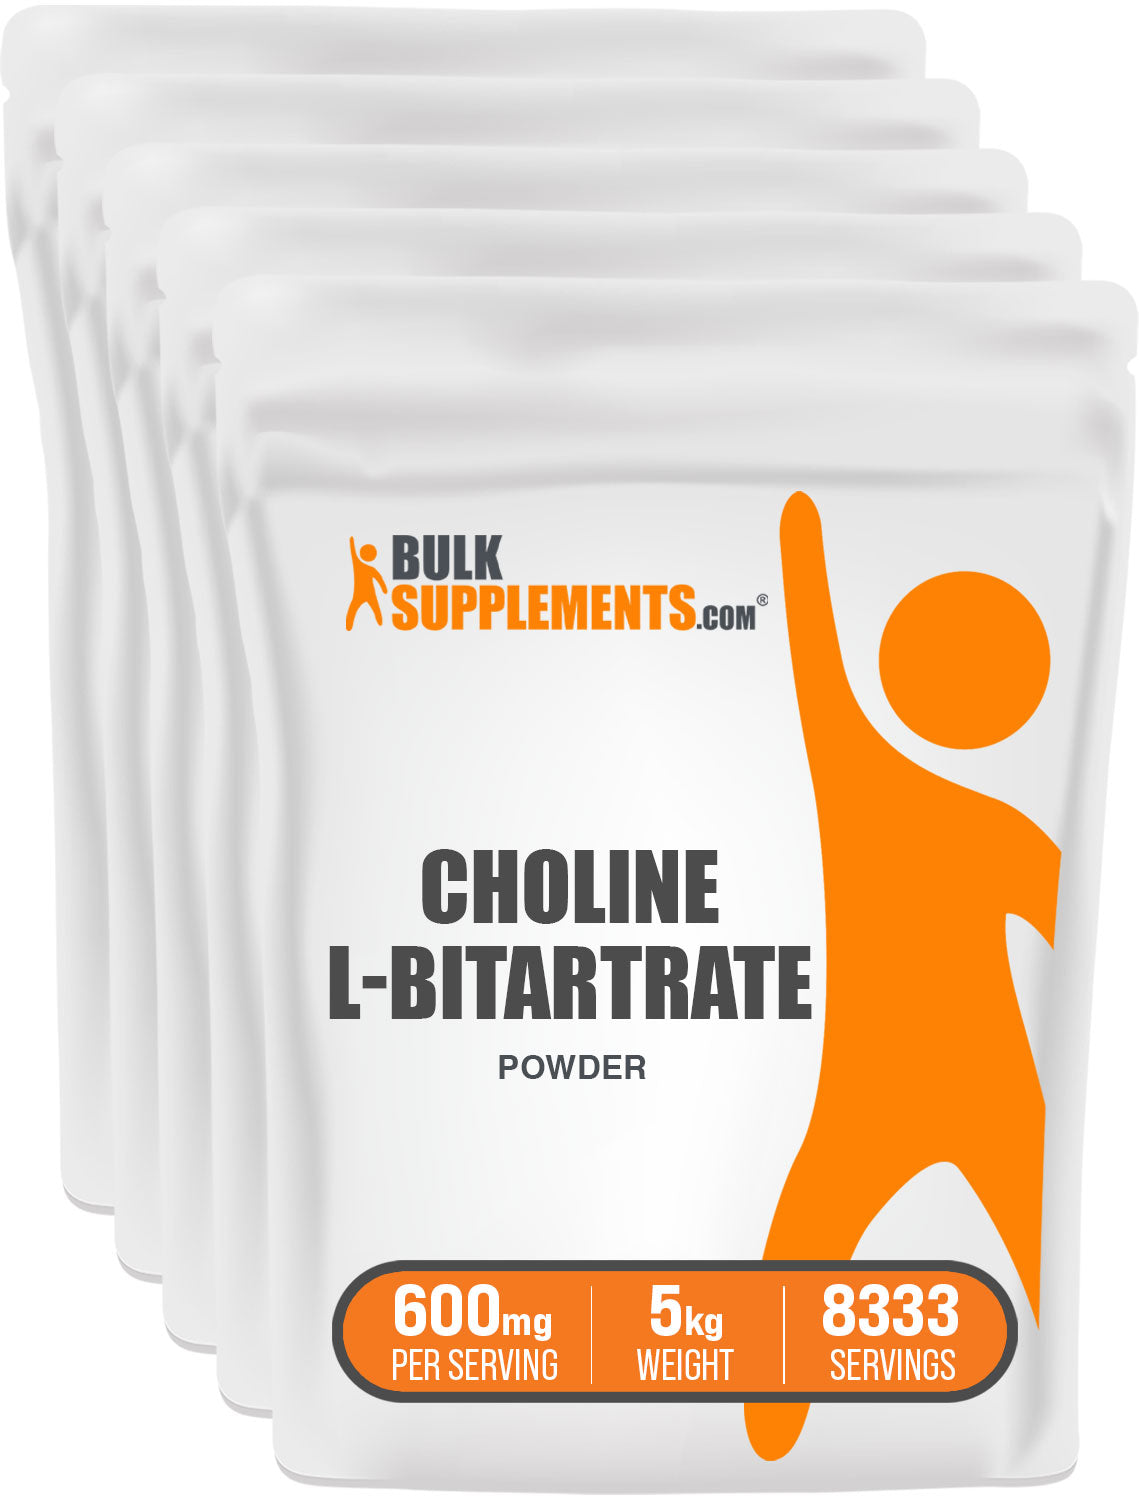 5kg choline supplements